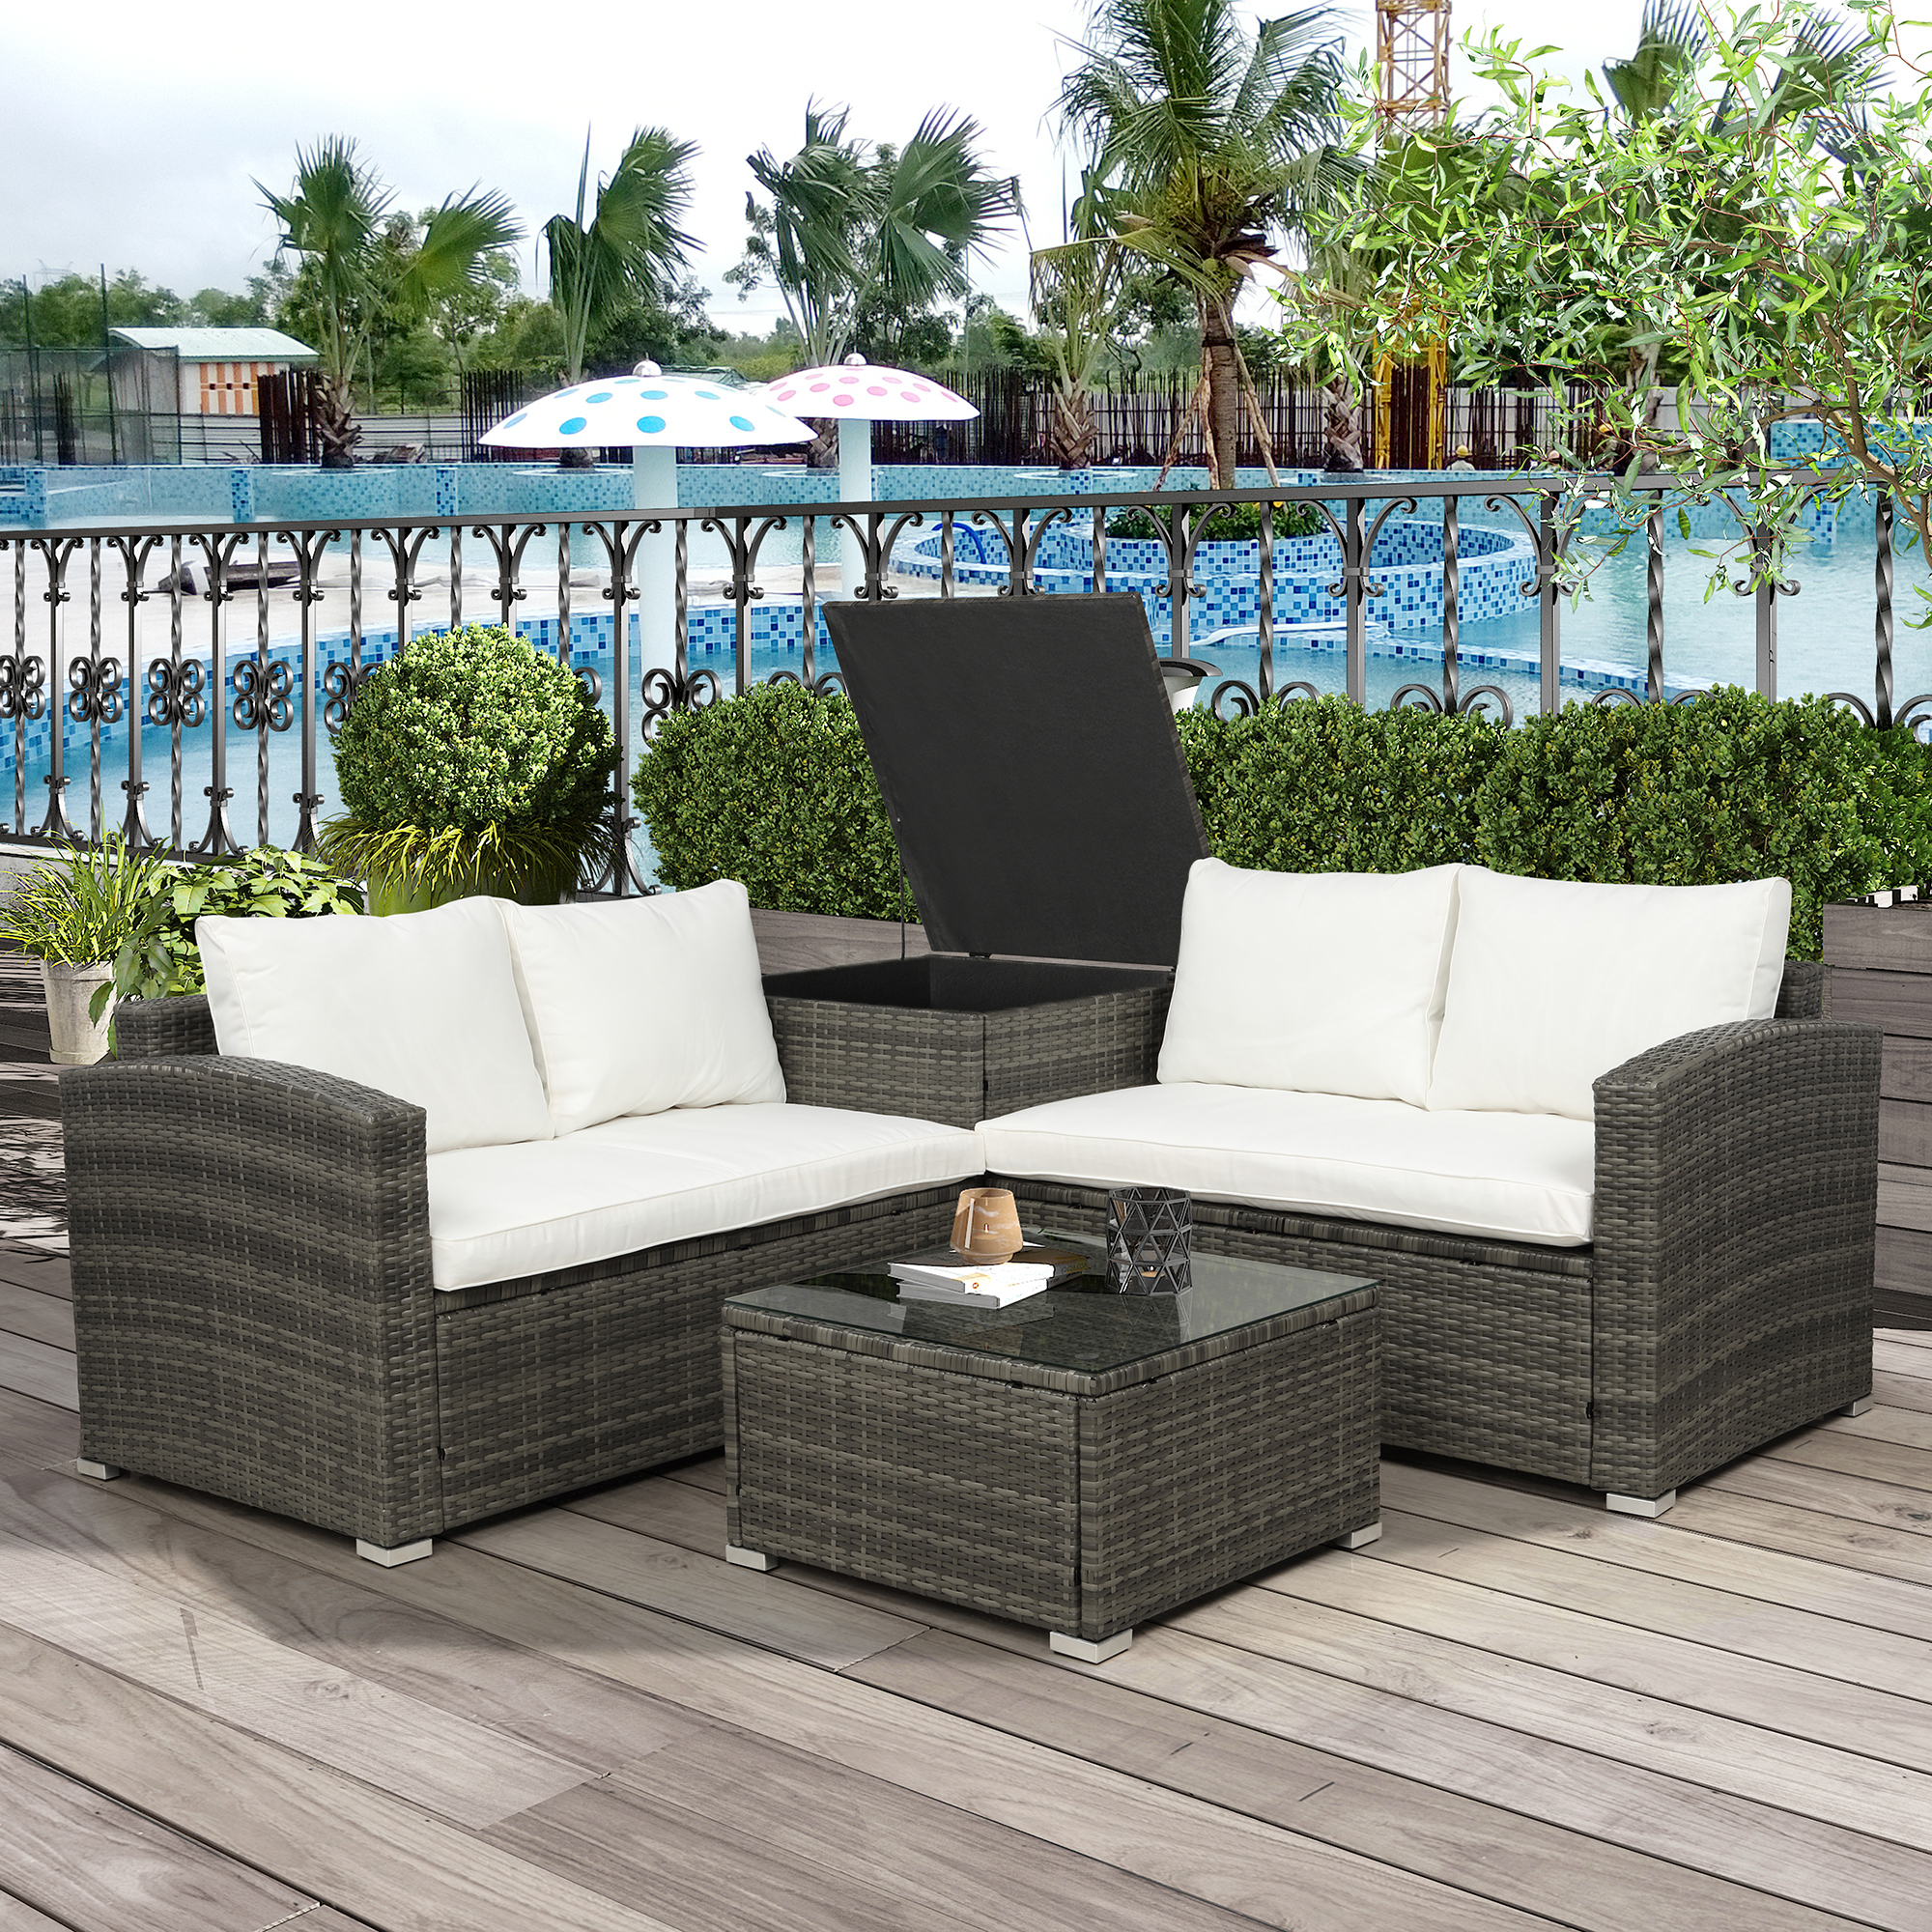 Artlia 4 PCS Outdoor Cushioned PE Rattan Sectional Sofa Set Garden Patio Furniture Set (Beige Cushion) - image 1 of 7